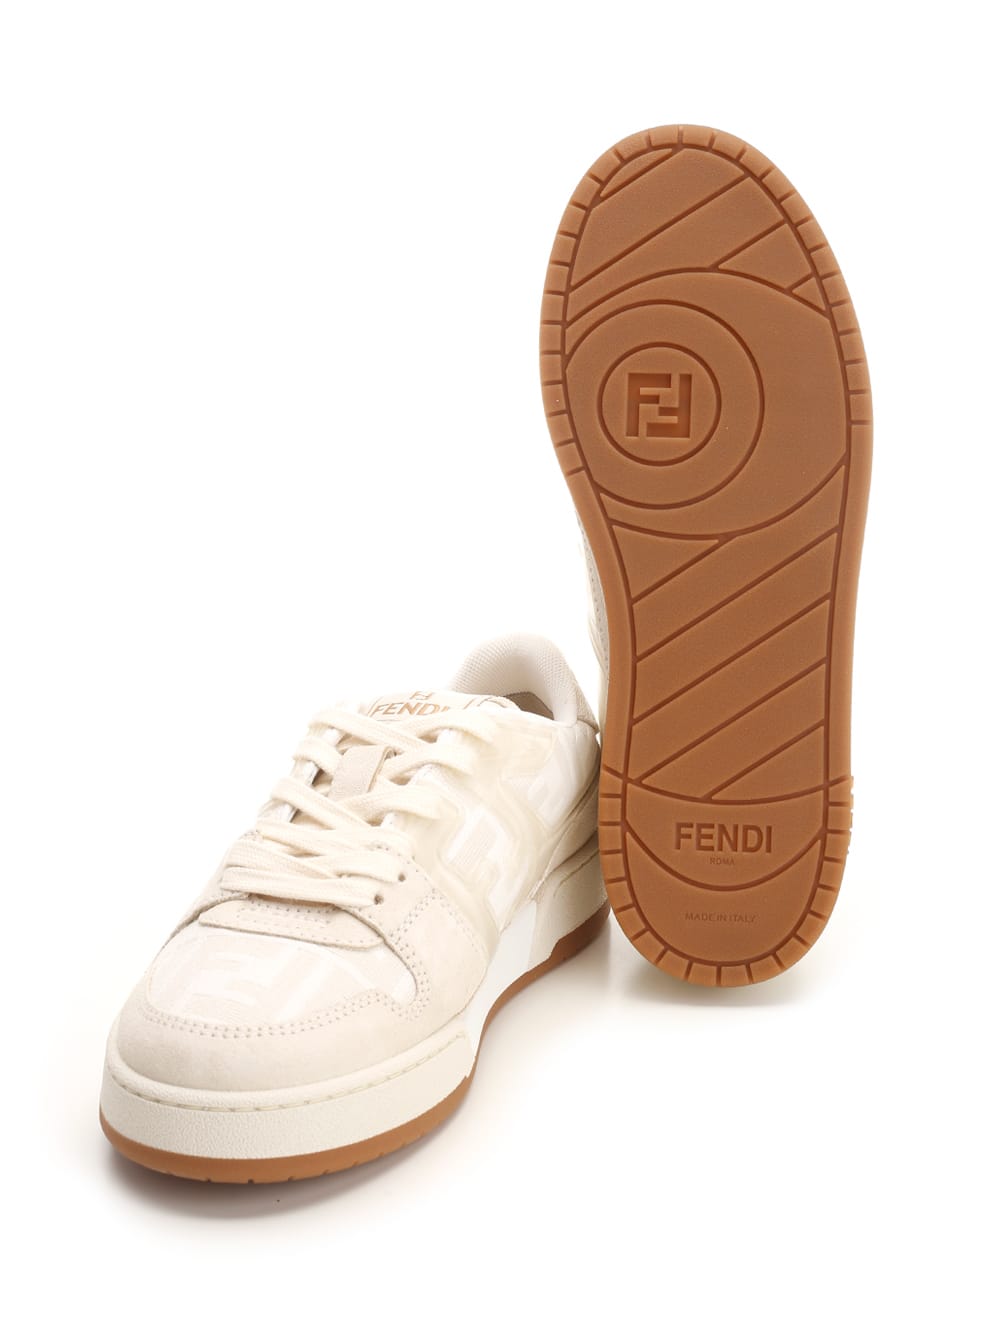 Shop Fendi Match Sneakers